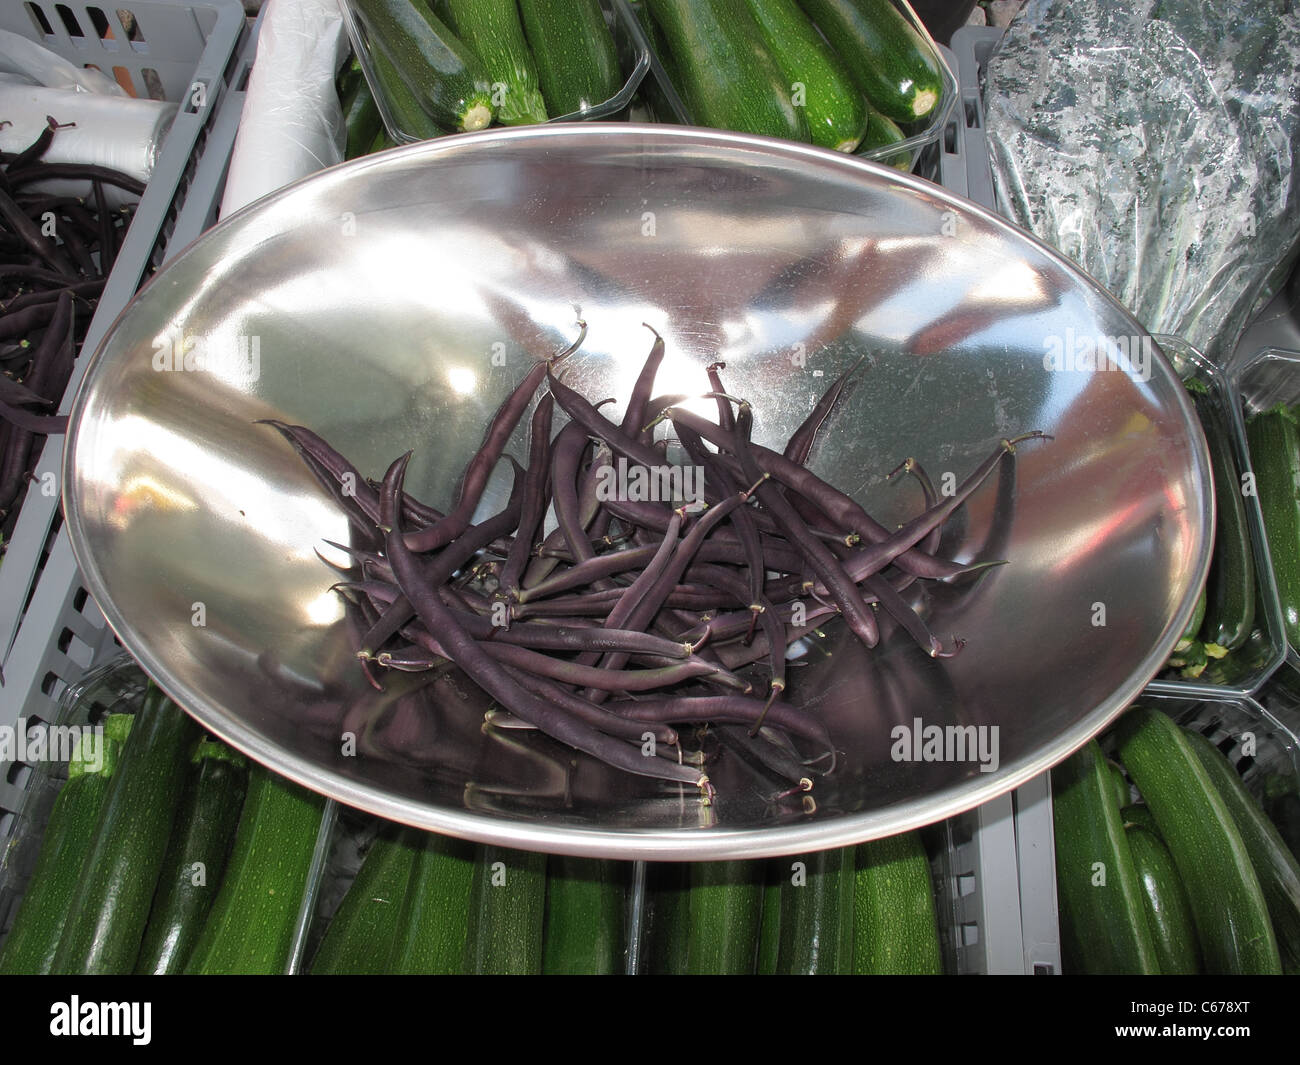 Scandinavia Turku open market street vendor stall. Purple beans sell in vegetable stall Stock Photo